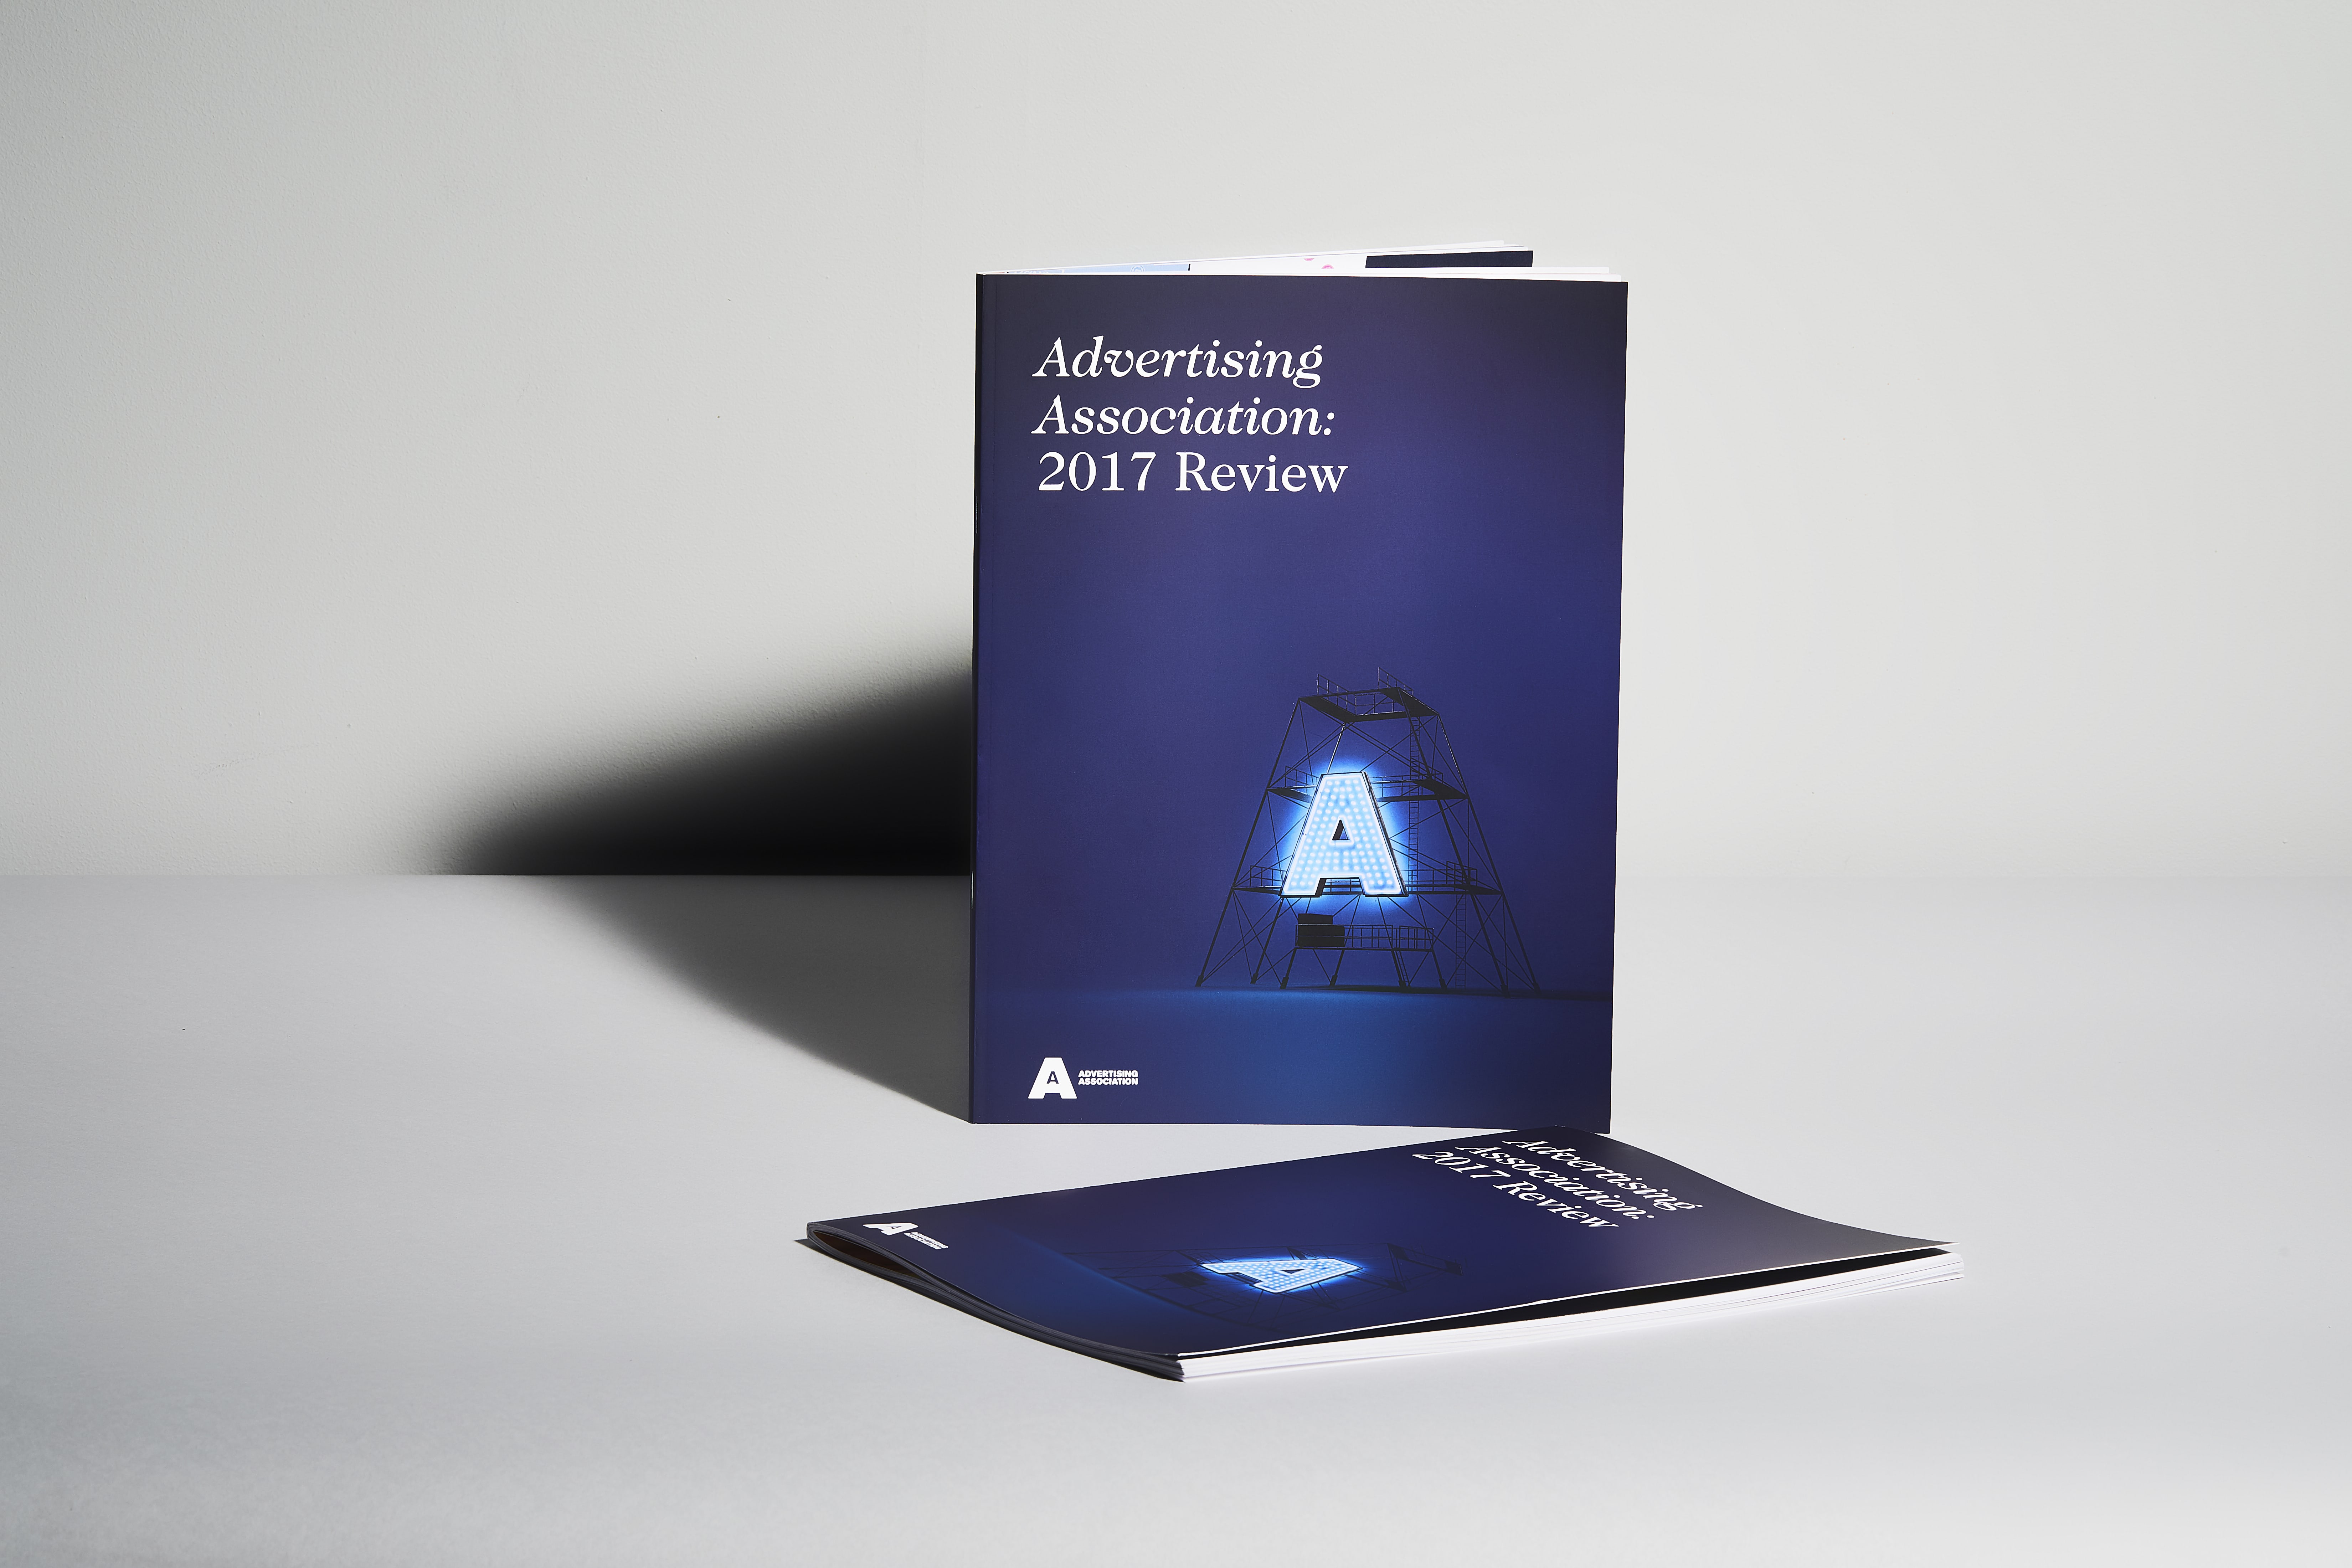 Advertising Association: 2017 Review - Advertising Association